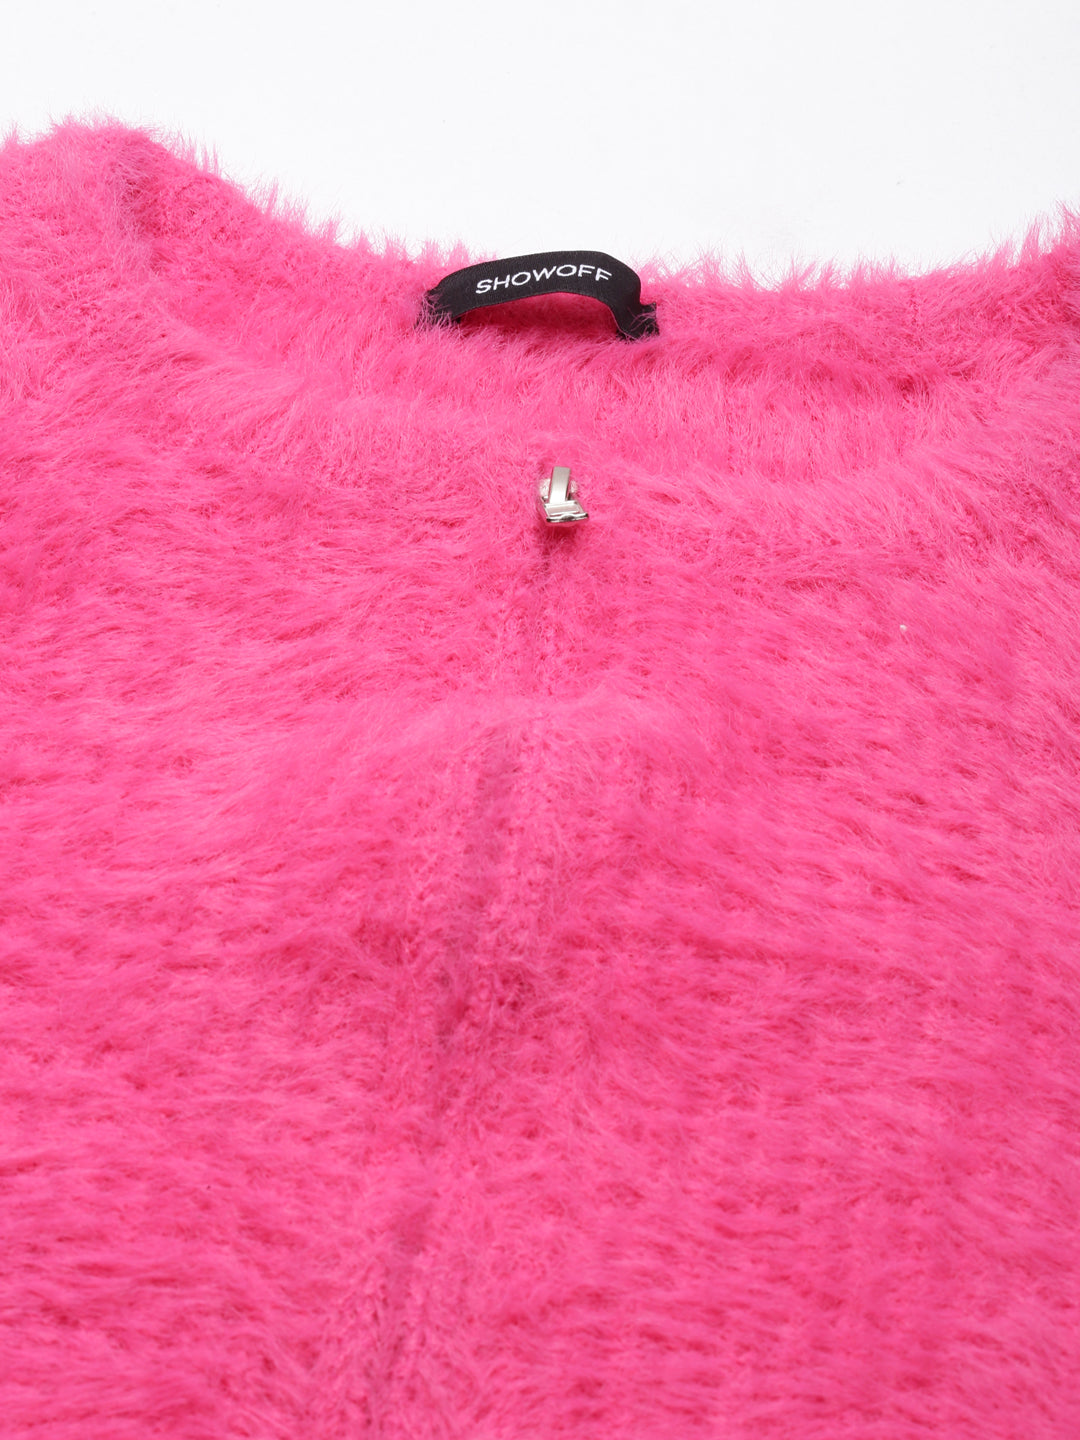 Women Solid Crop Pink Cardigan